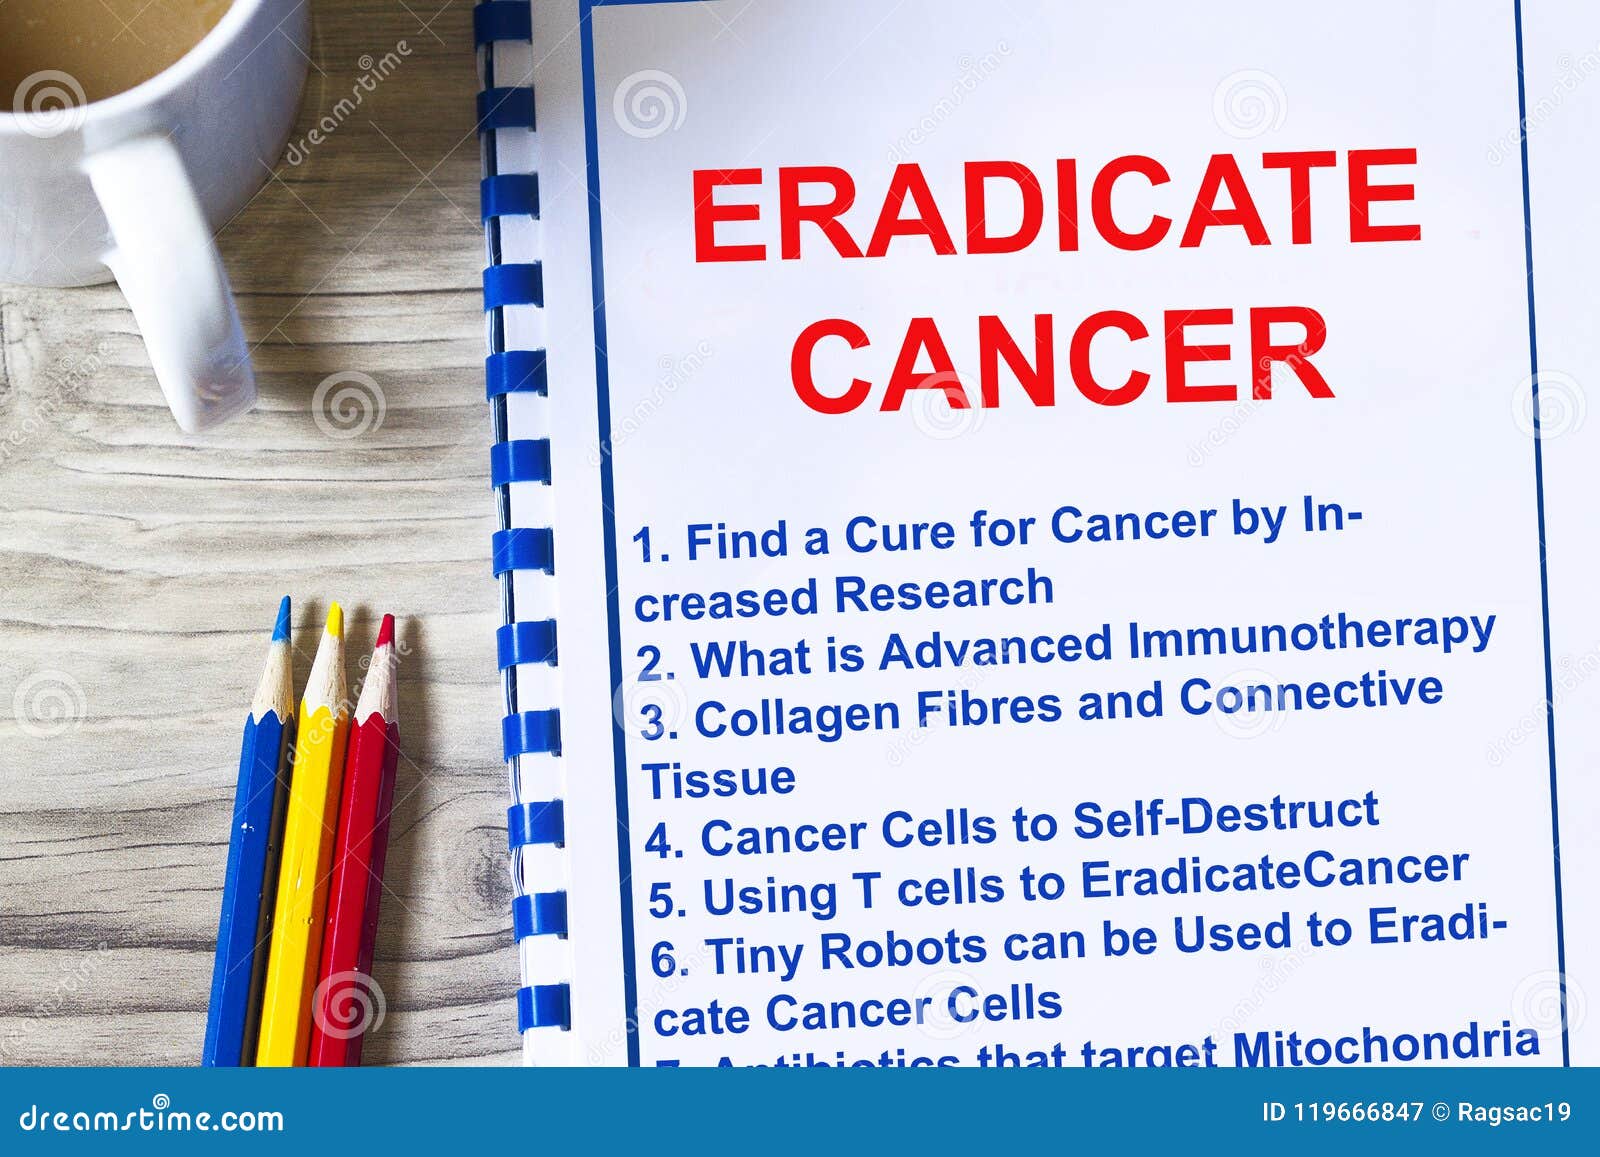 how to eradicate cancer concept